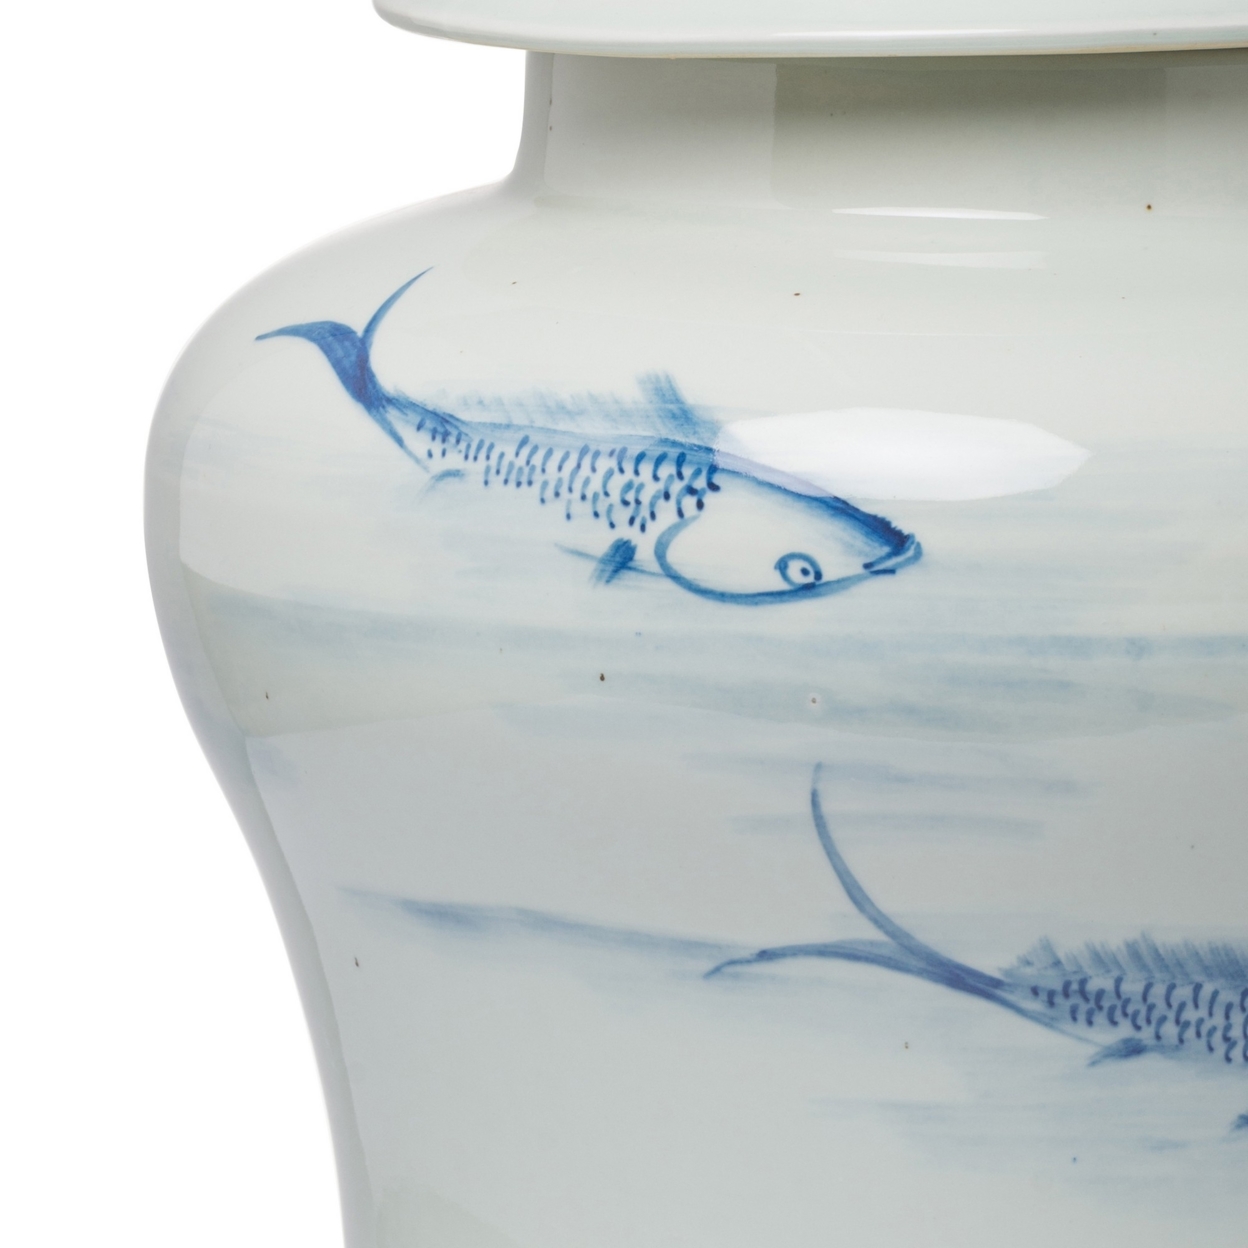 18 Inch Porcelain Ginger Jar, Artful Wispy Fish, Classic White And Blue- Saltoro Sherpi